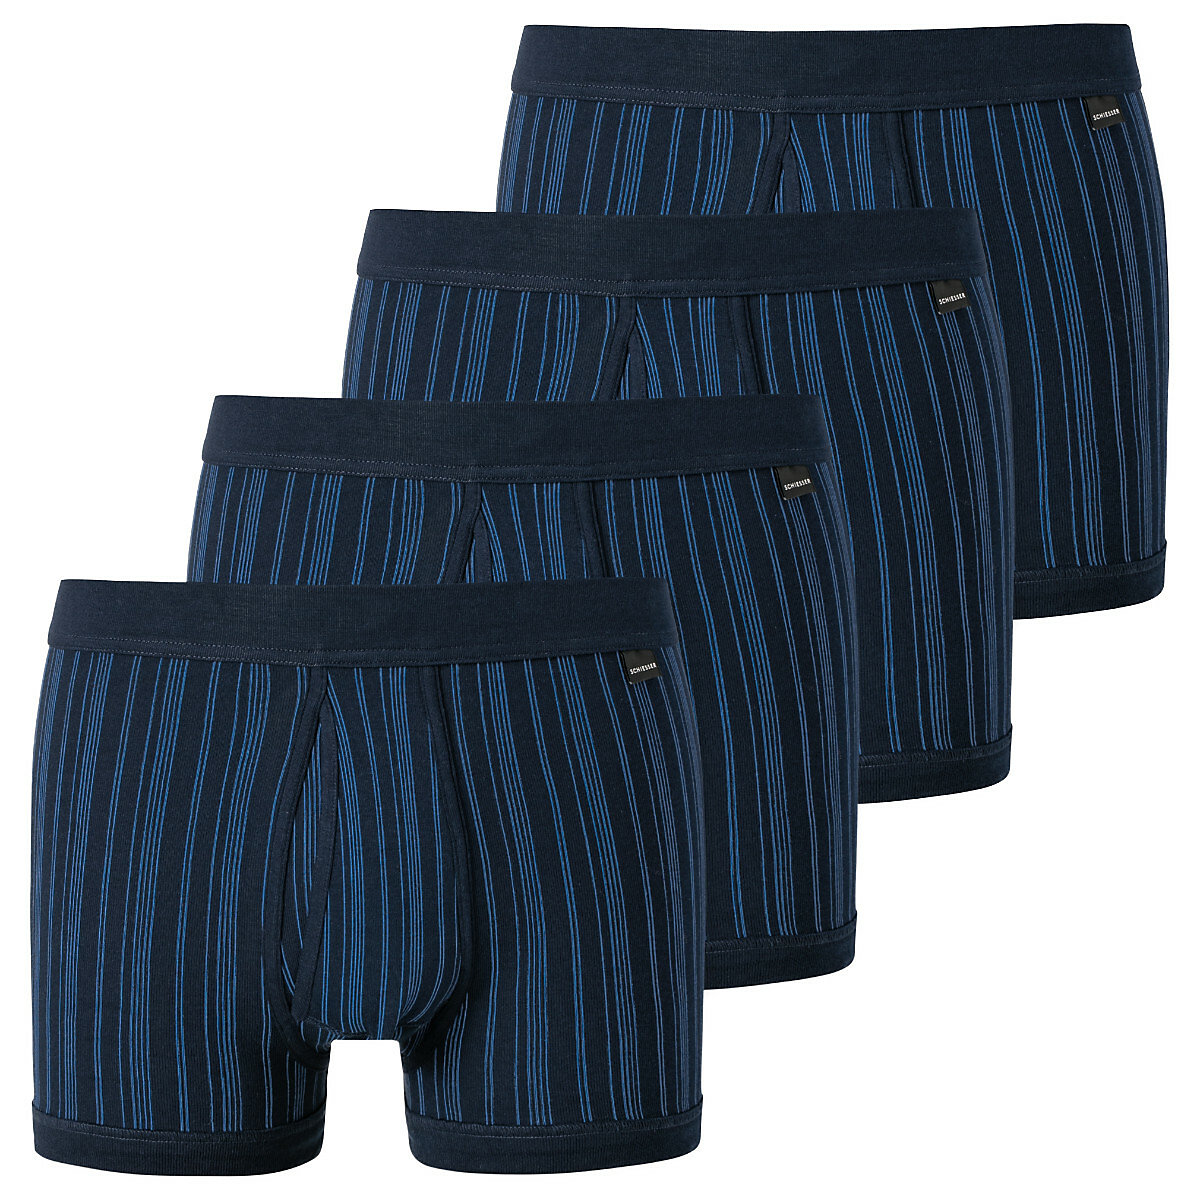 SCHIESSER Unterhose kurz mit Eingriff 4er Pack Original Classics Feinripp Panties dunkelblau